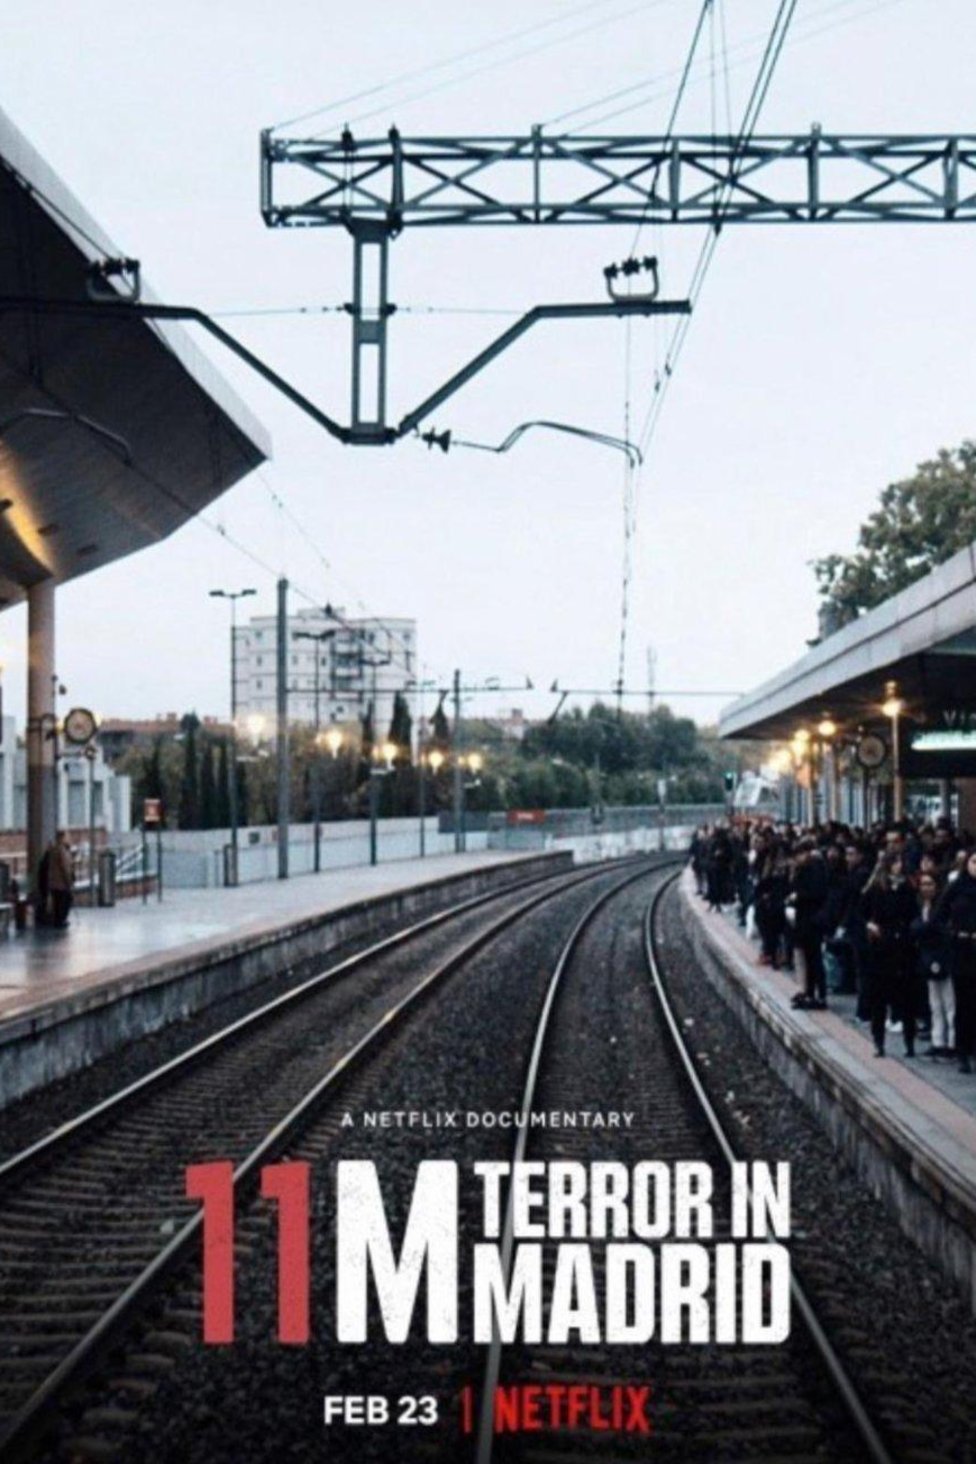 L'affiche originale du film 11M: Terror in Madrid en espagnol